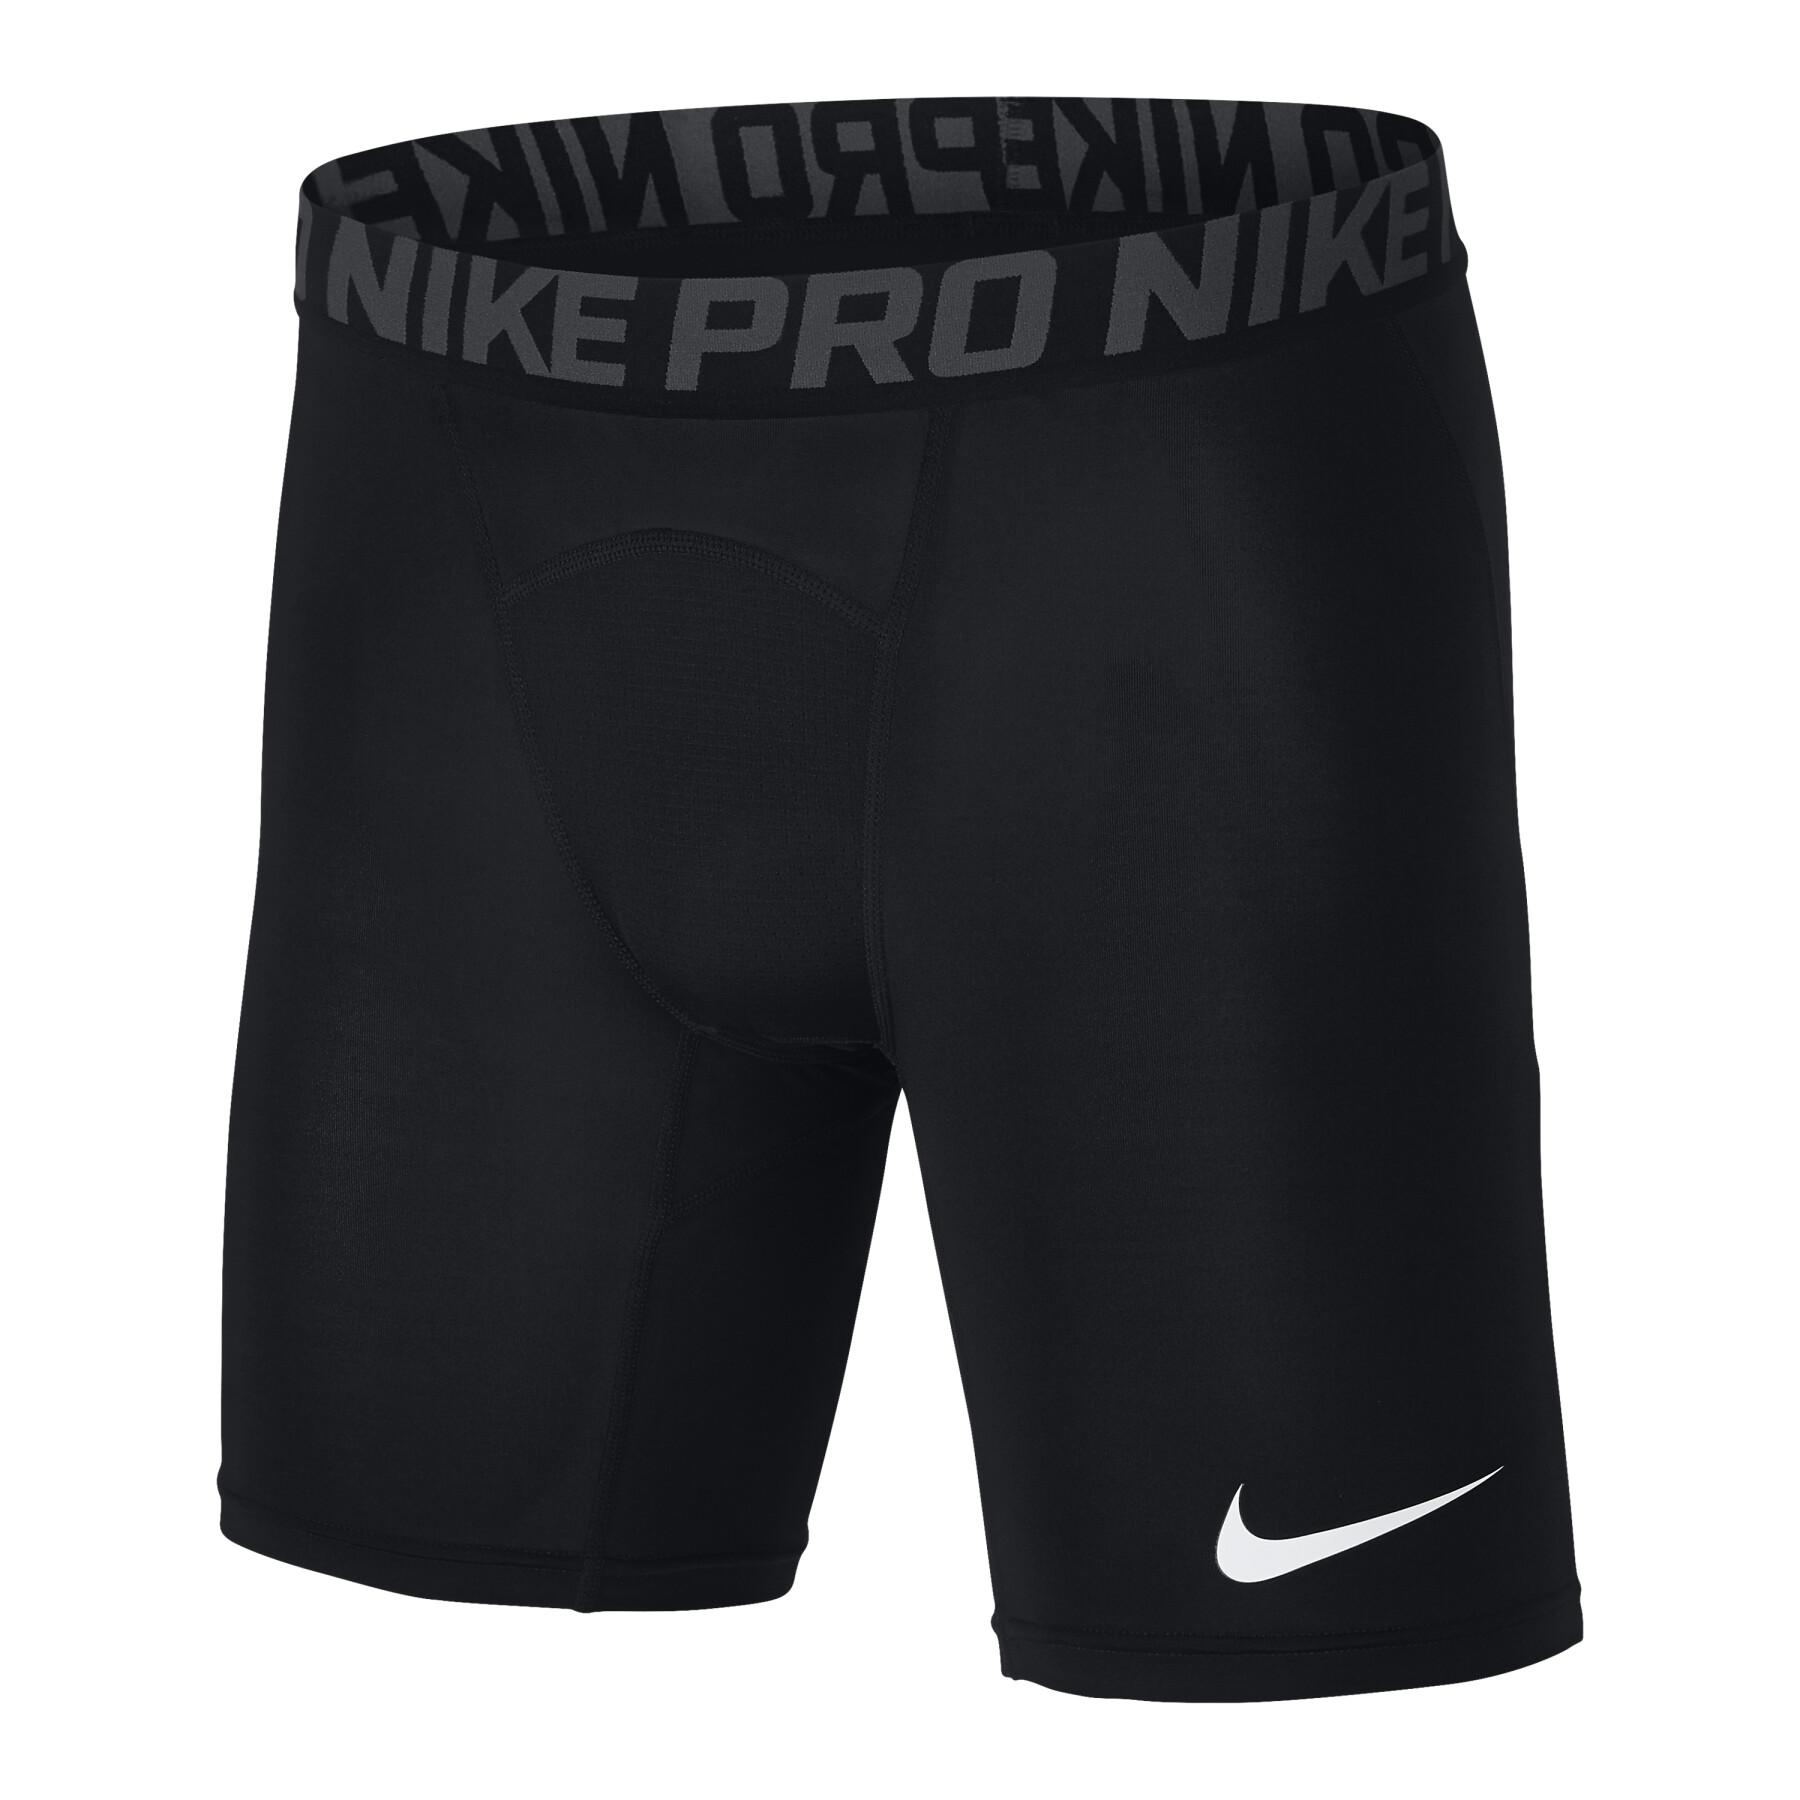 Corto Nike Pro 15 cm